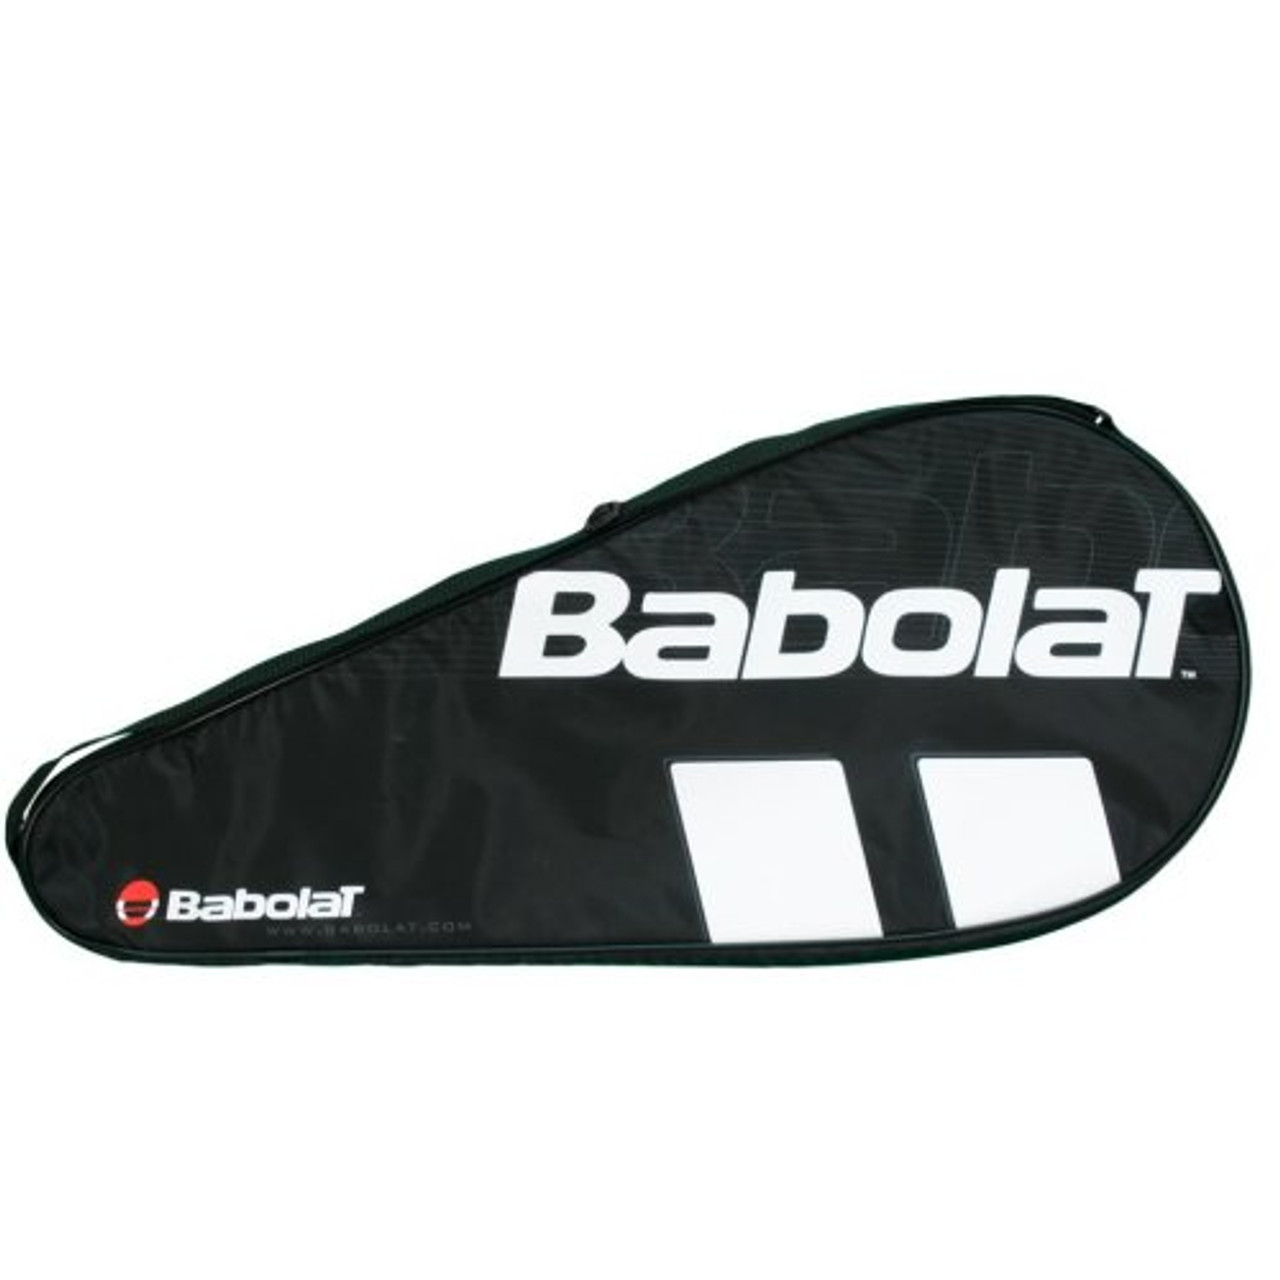 Racket Cover Babolat Babolat 70 x 22cm Bag 